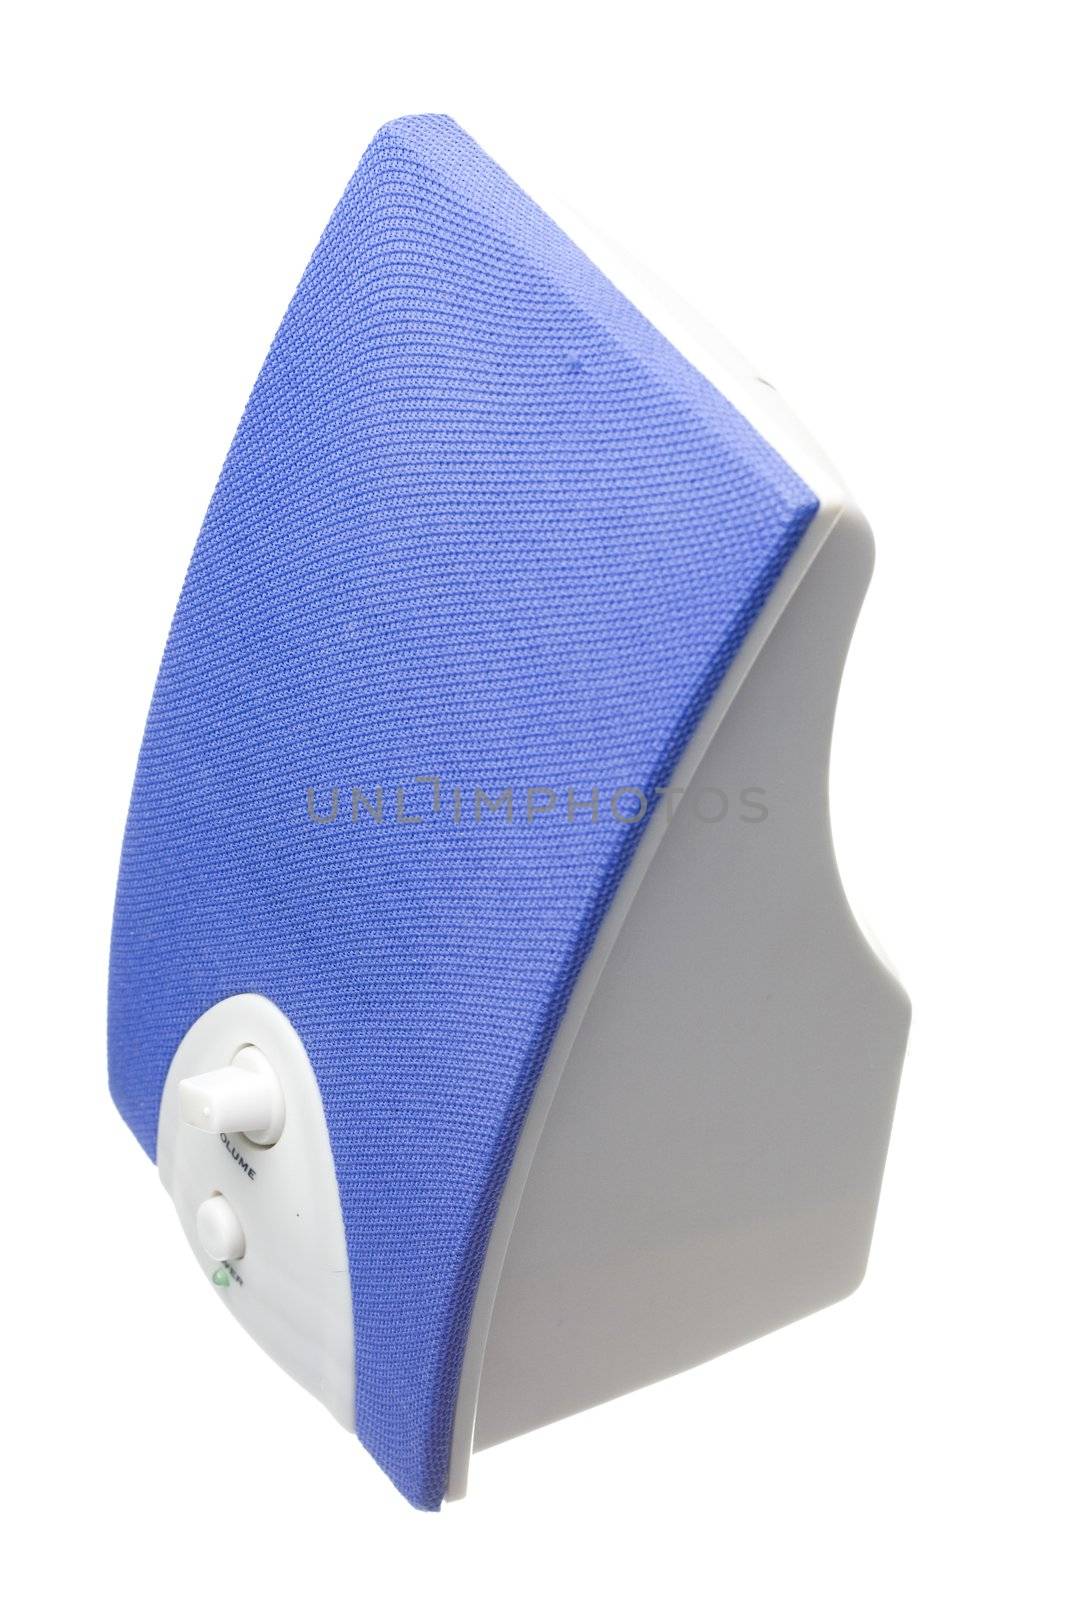 blue speaker by Trebuchet